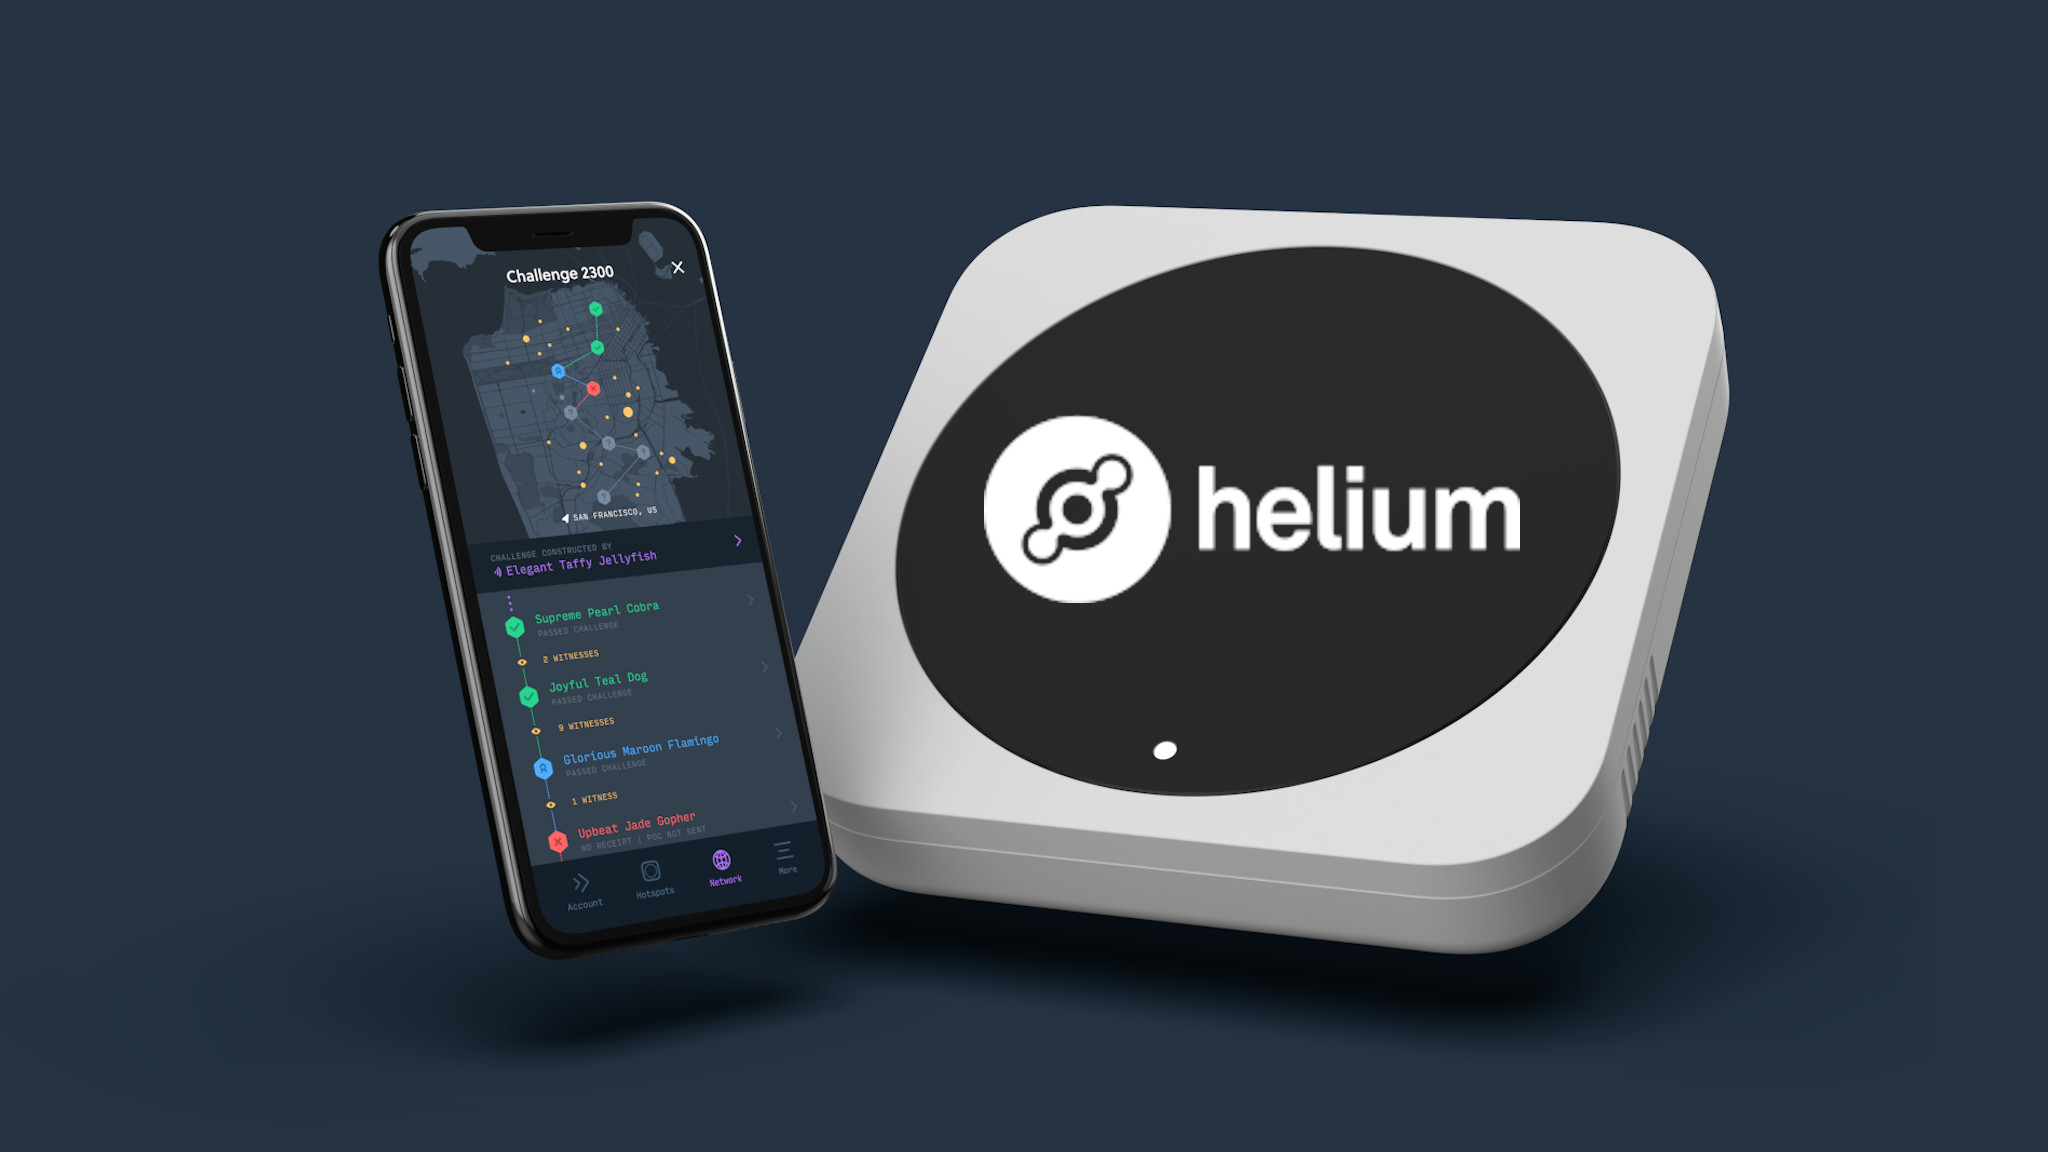 Helium mining